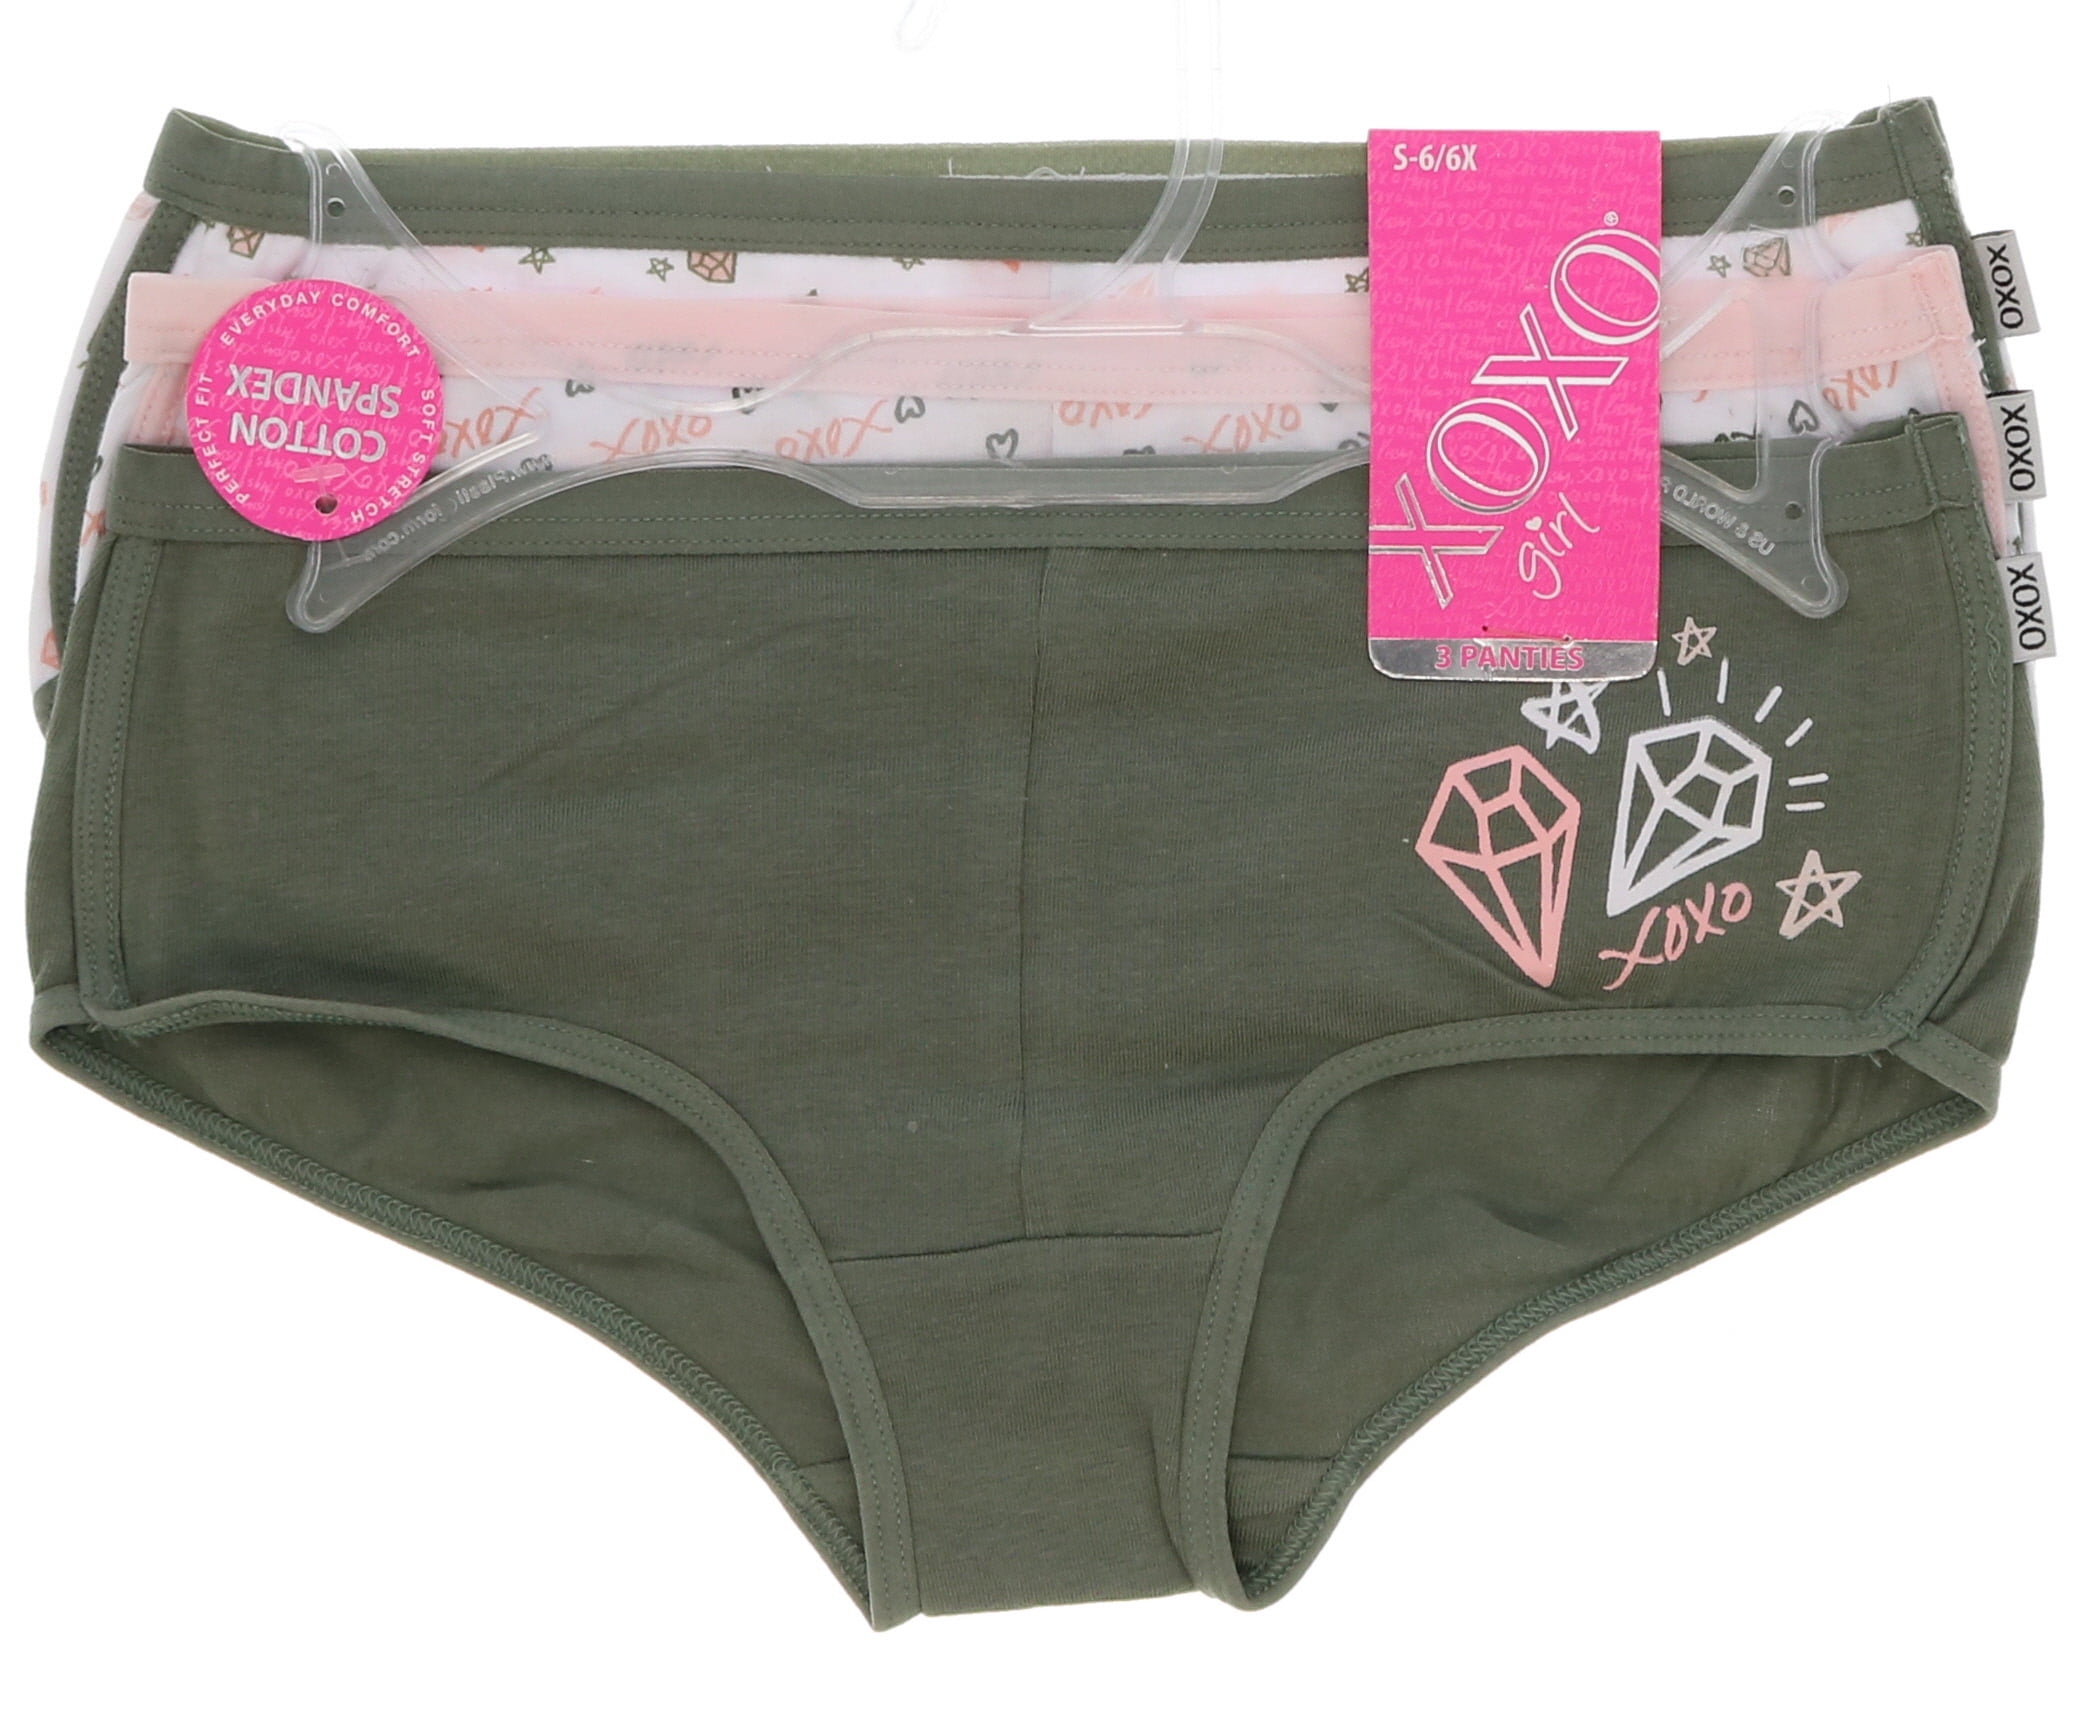 POPKOK Teen Girls Underwear Cotton Brief Panties 6 pack (12-14 Years,  Lively Color)